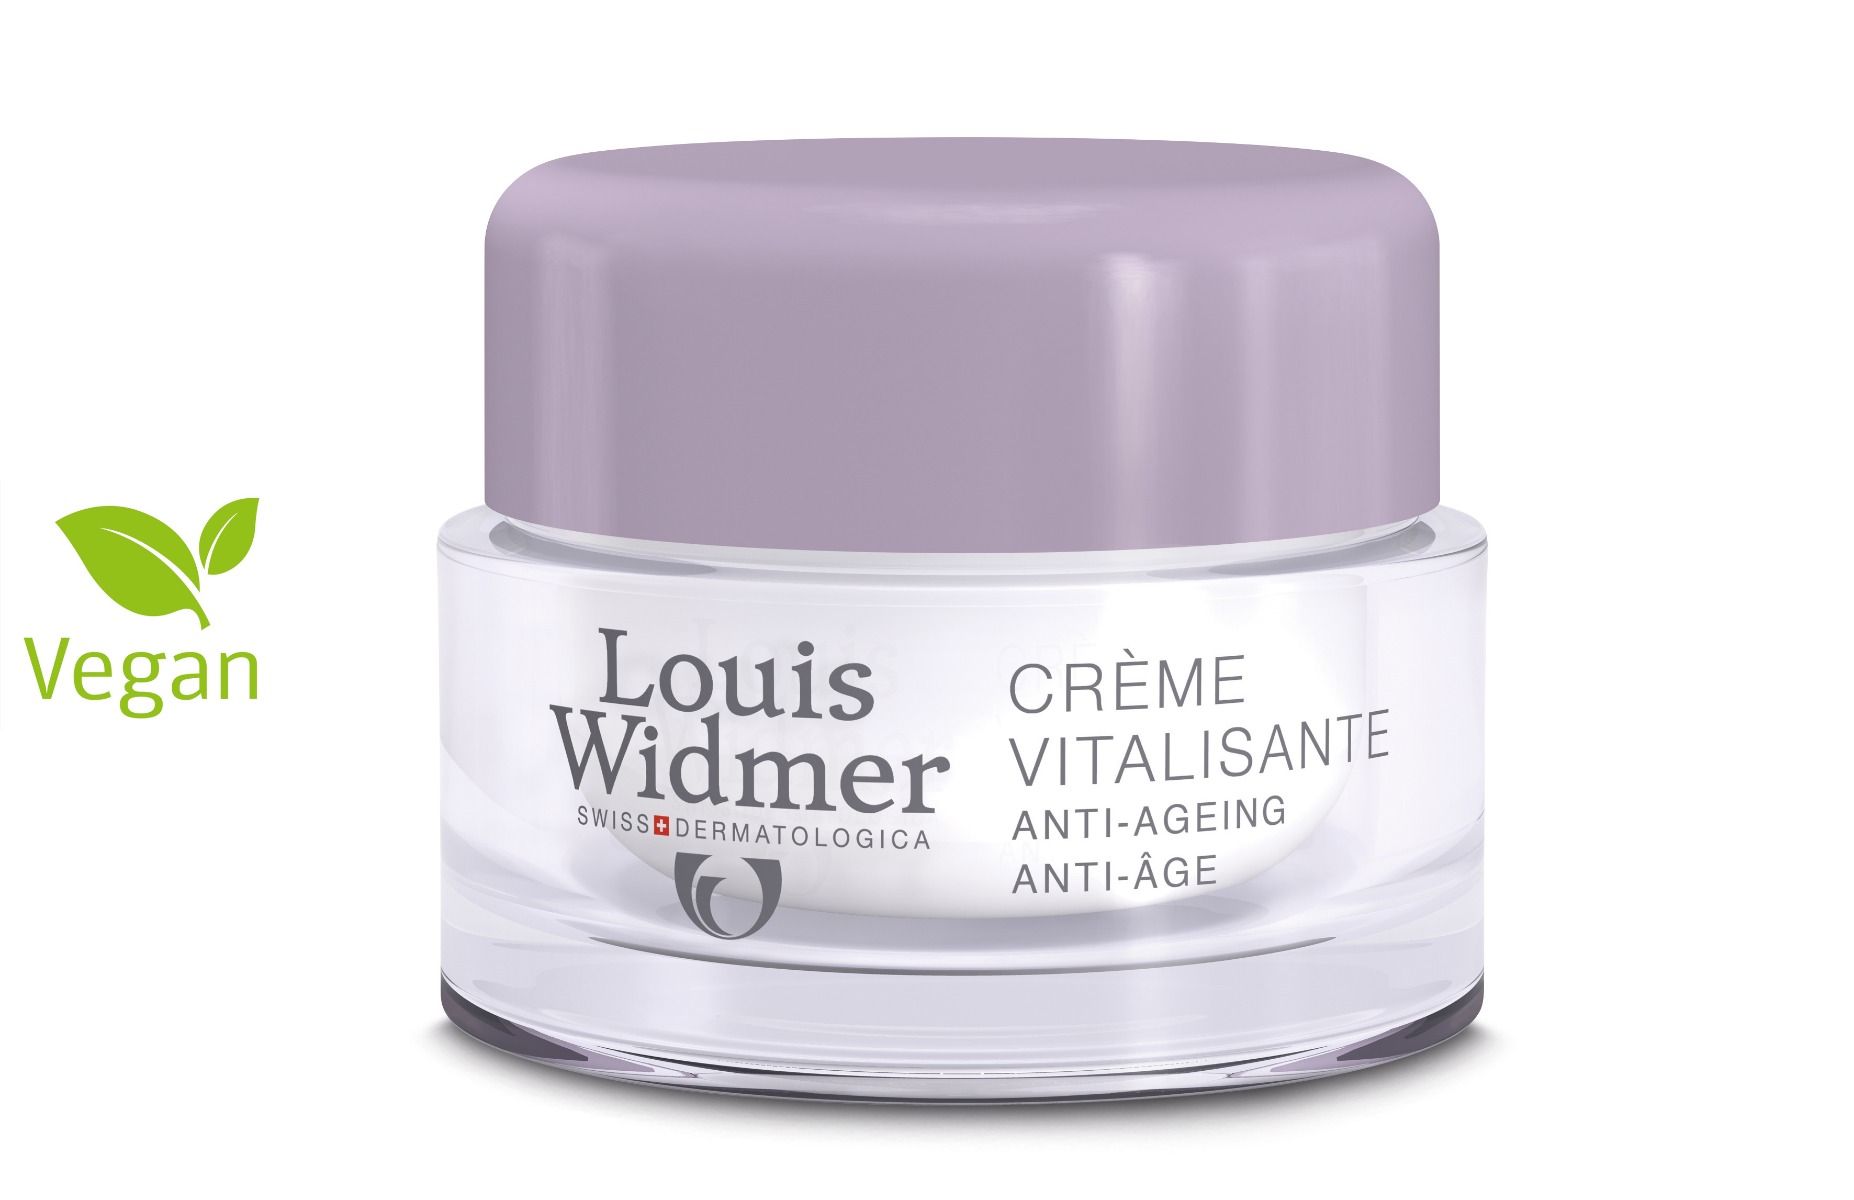 LOUIS WIDMER Creme Vitalisante